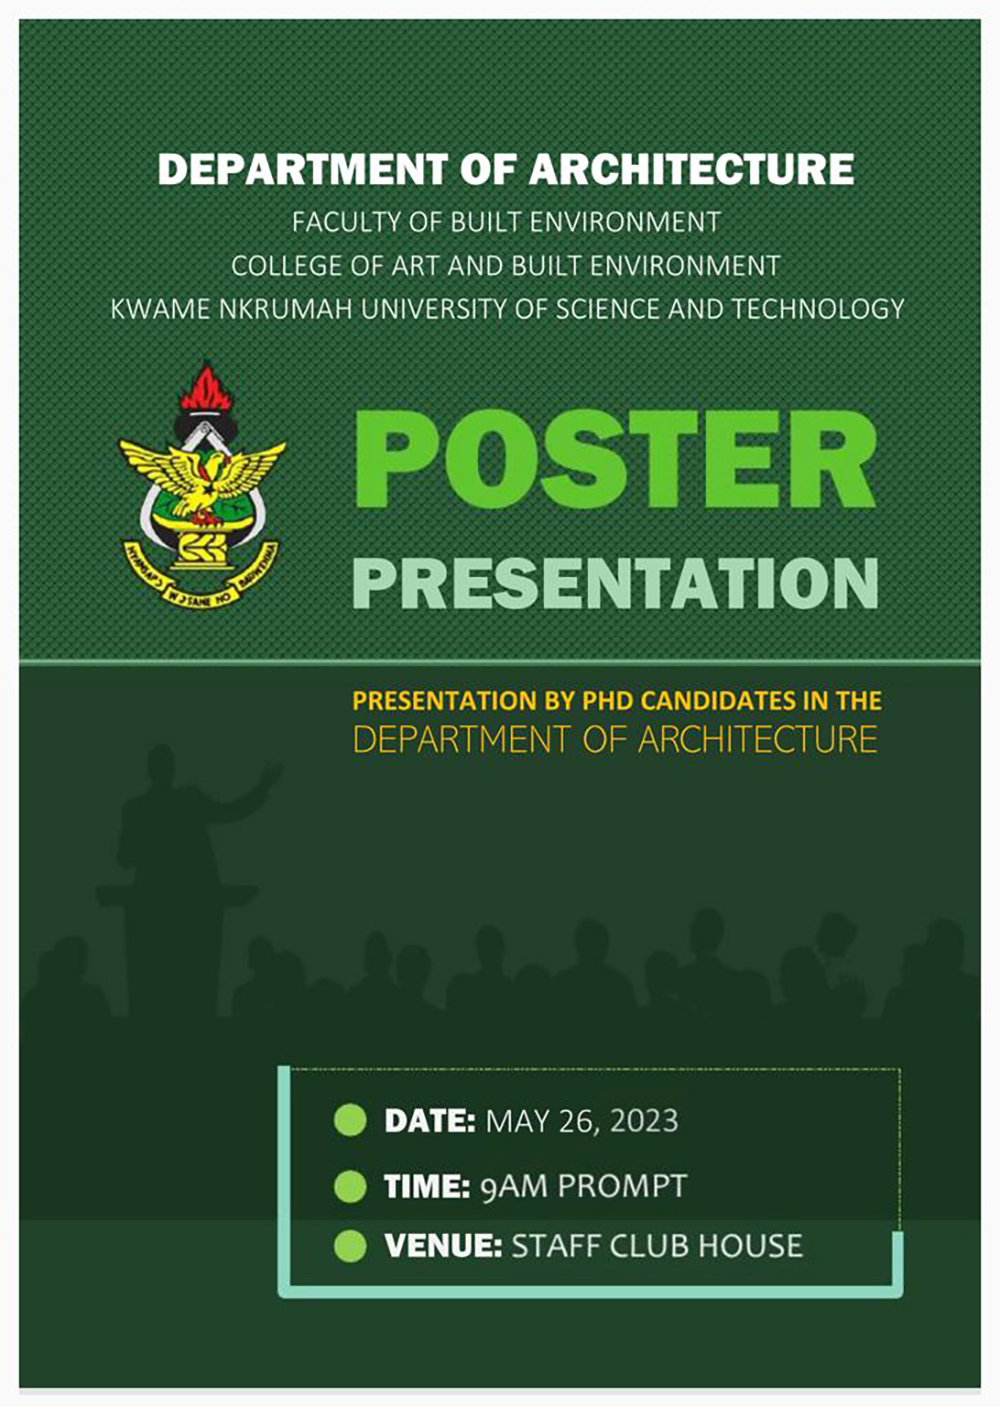 PhD Poster Presentation